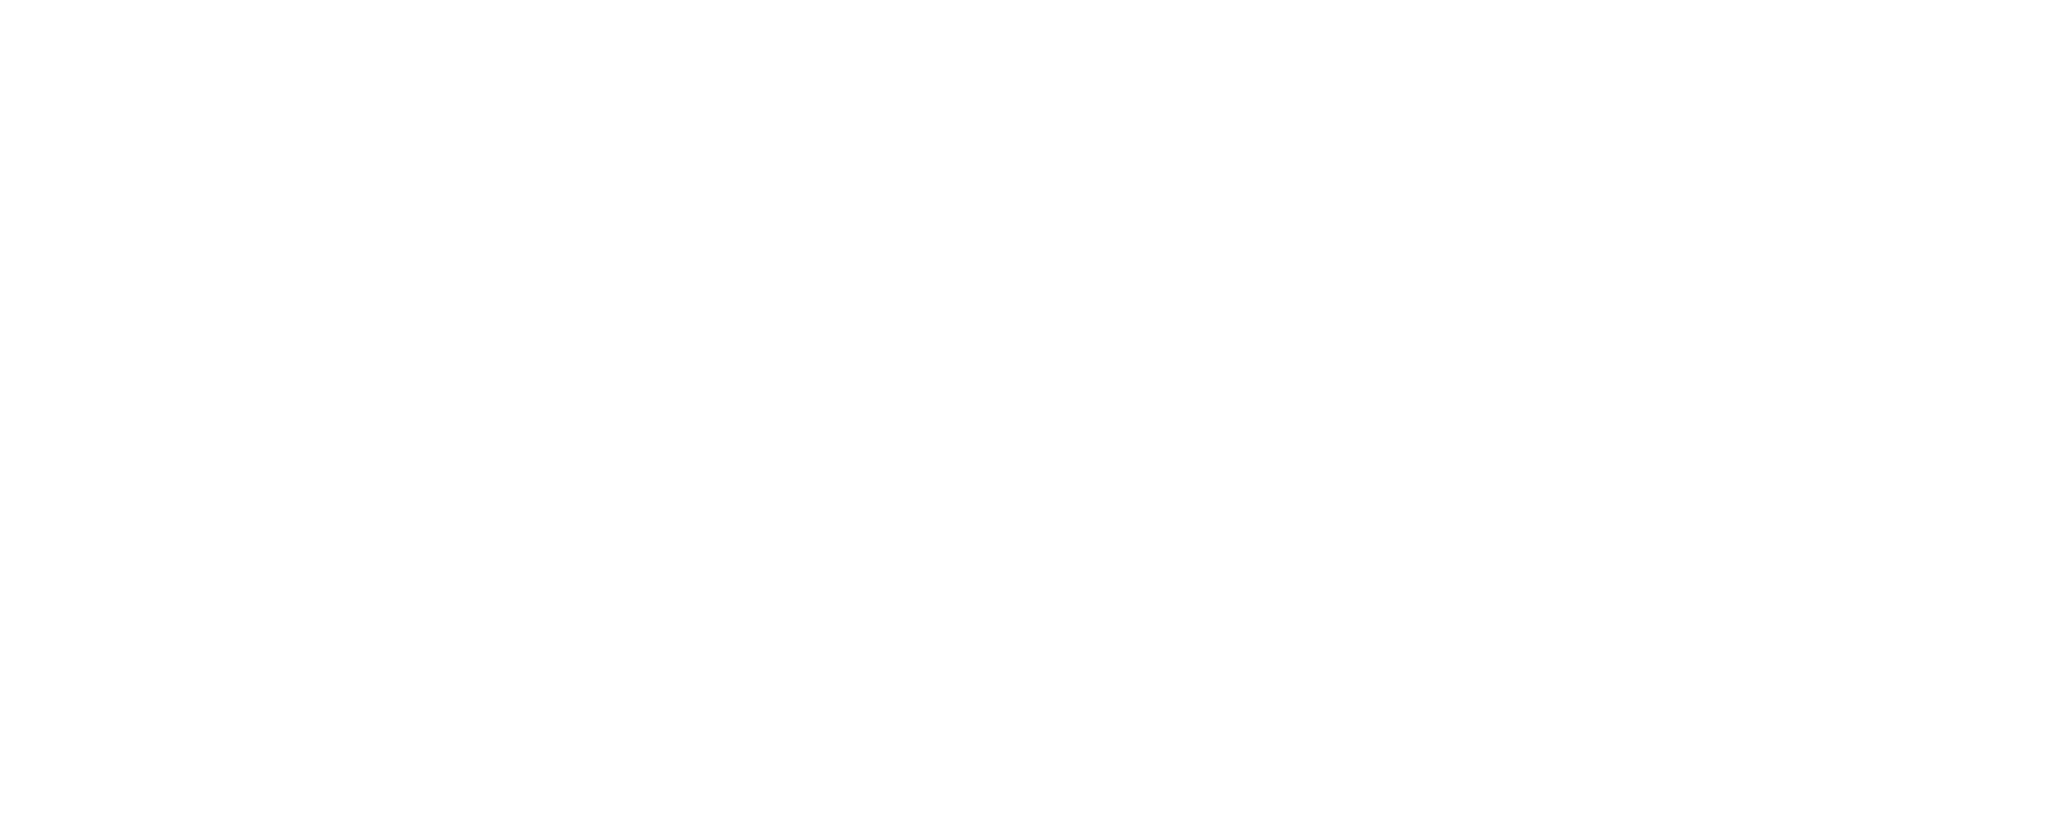 Foundation for Rural America